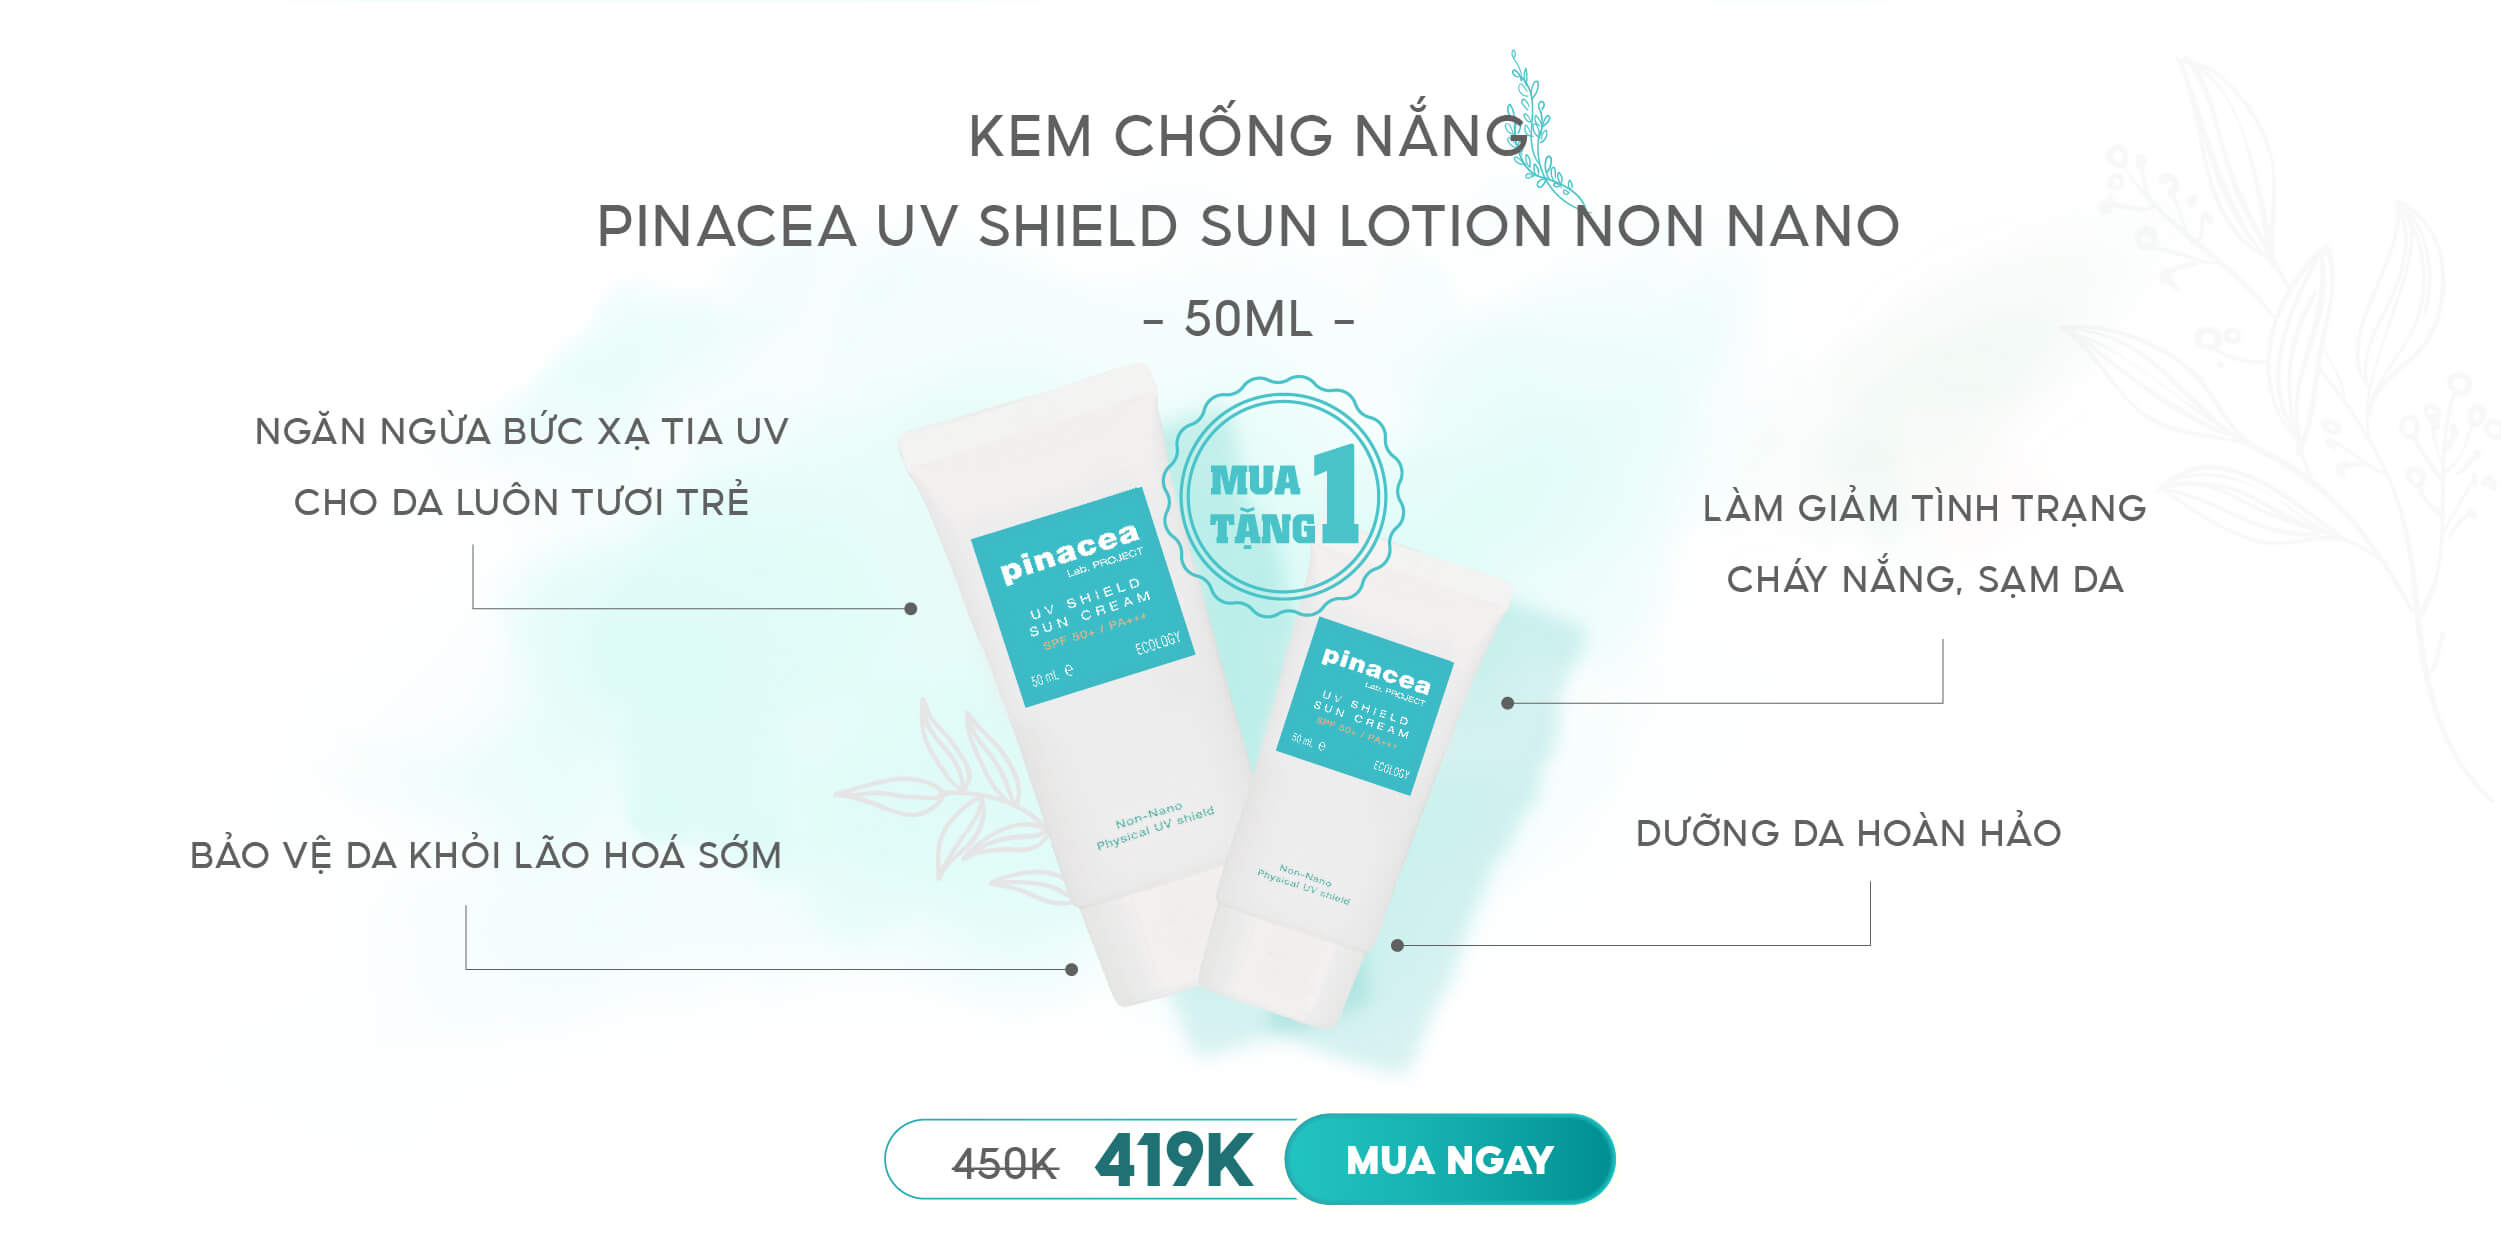 Kem chống nắng Pinacea UV Shield Sun Lotion Non Nano- 50ml